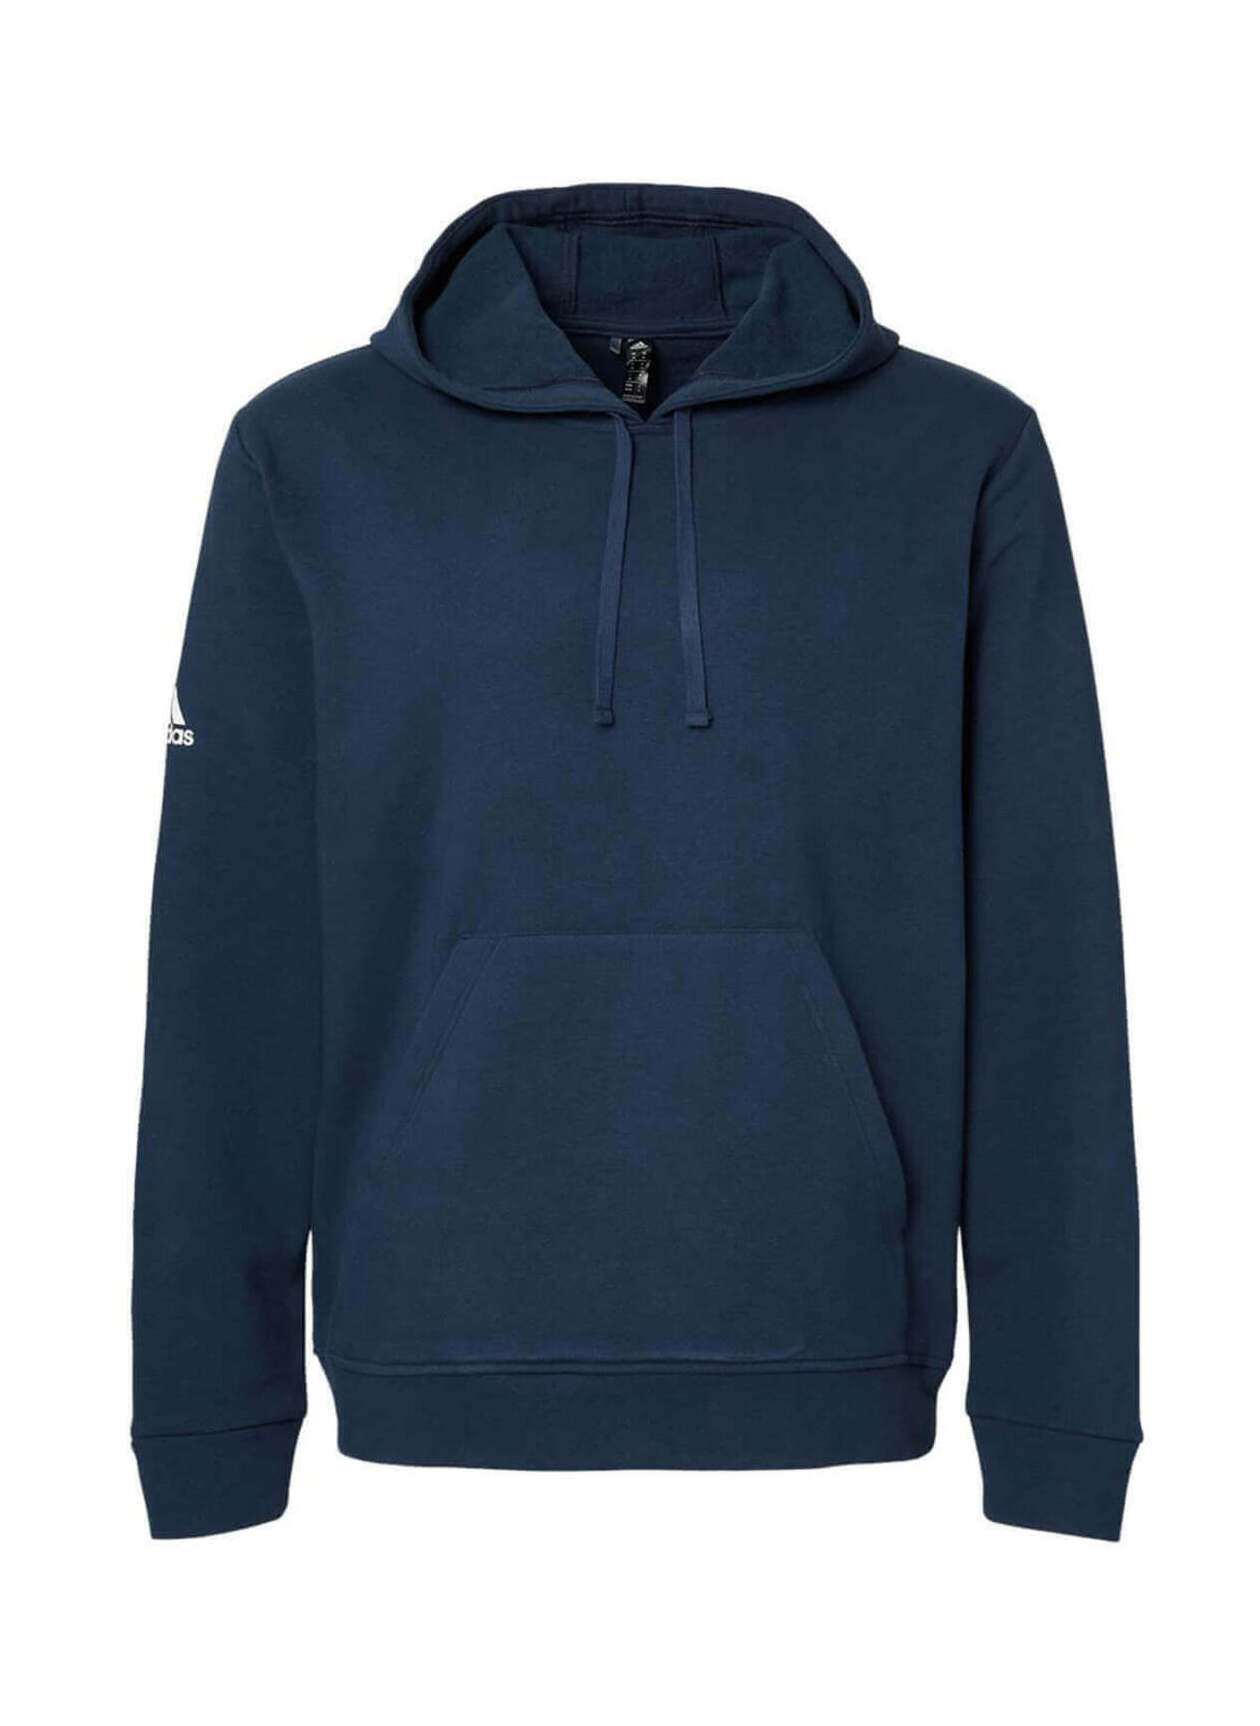 Adidas Men's Collegiate Royal Fleece Hooded Sweatshirt